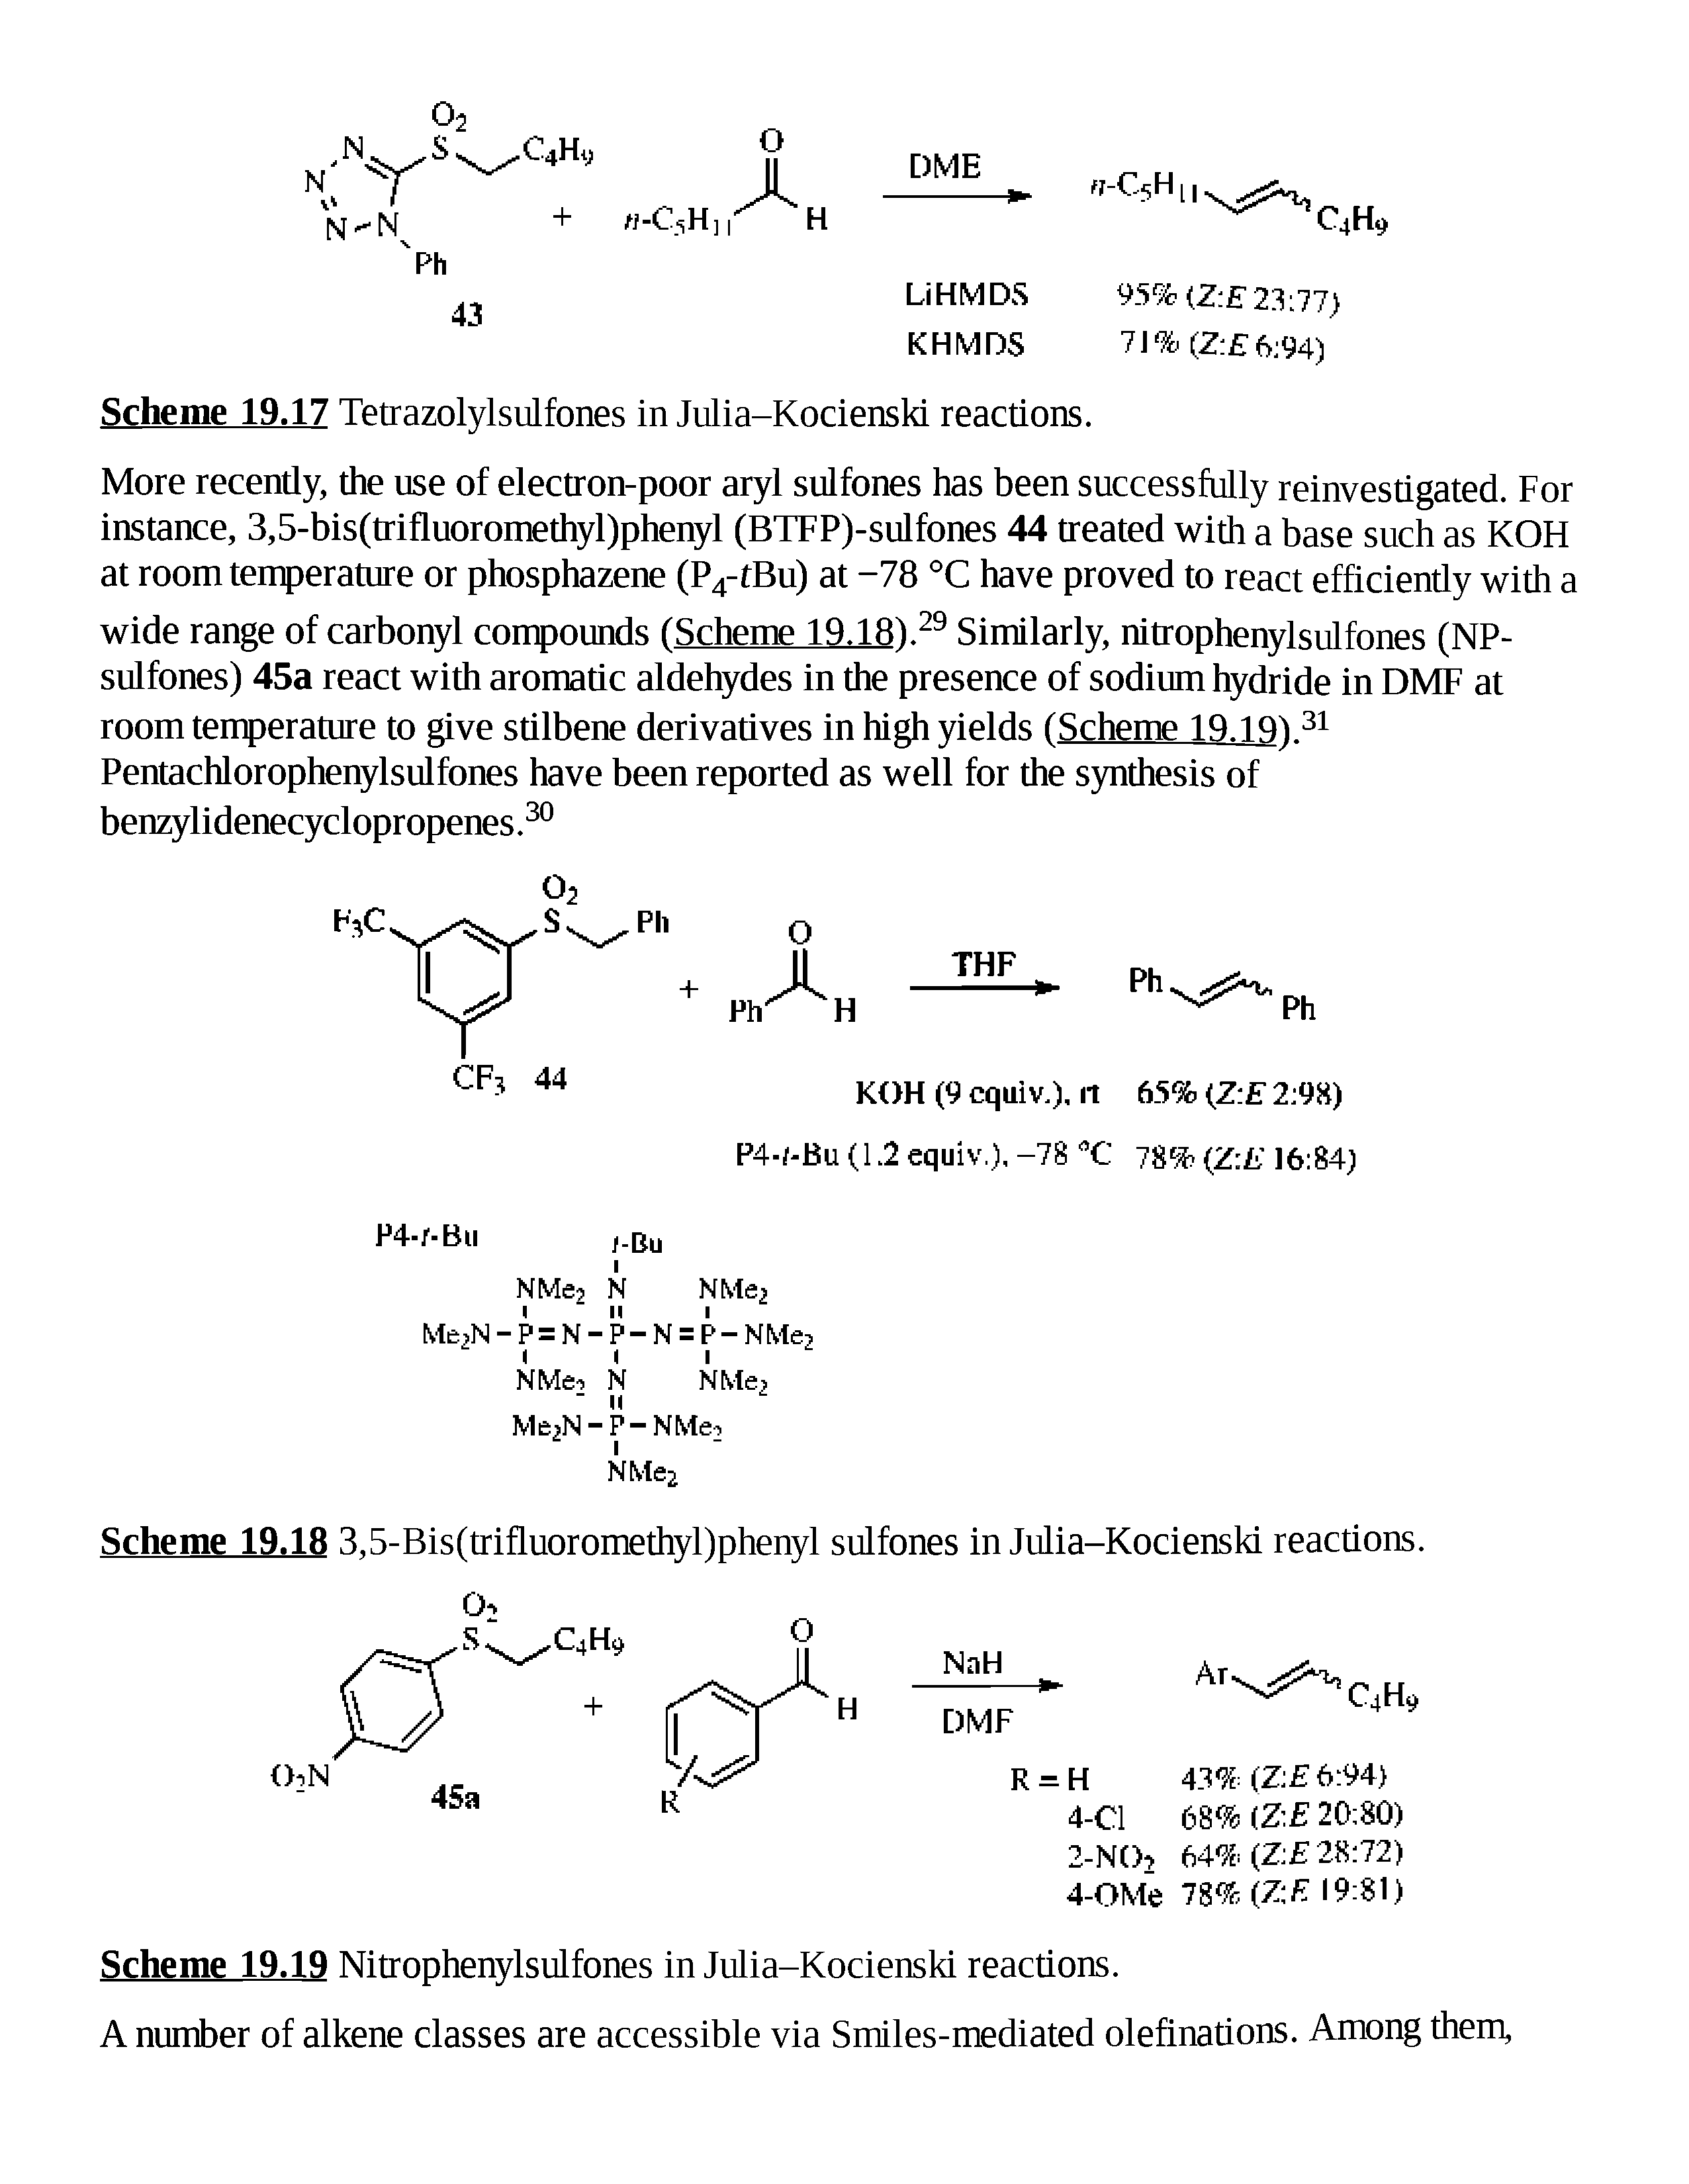 Scheme 19.18 3,5-Bis(trifluoromethyl)phenyl sulfones in Julia-Kocienski reactions.